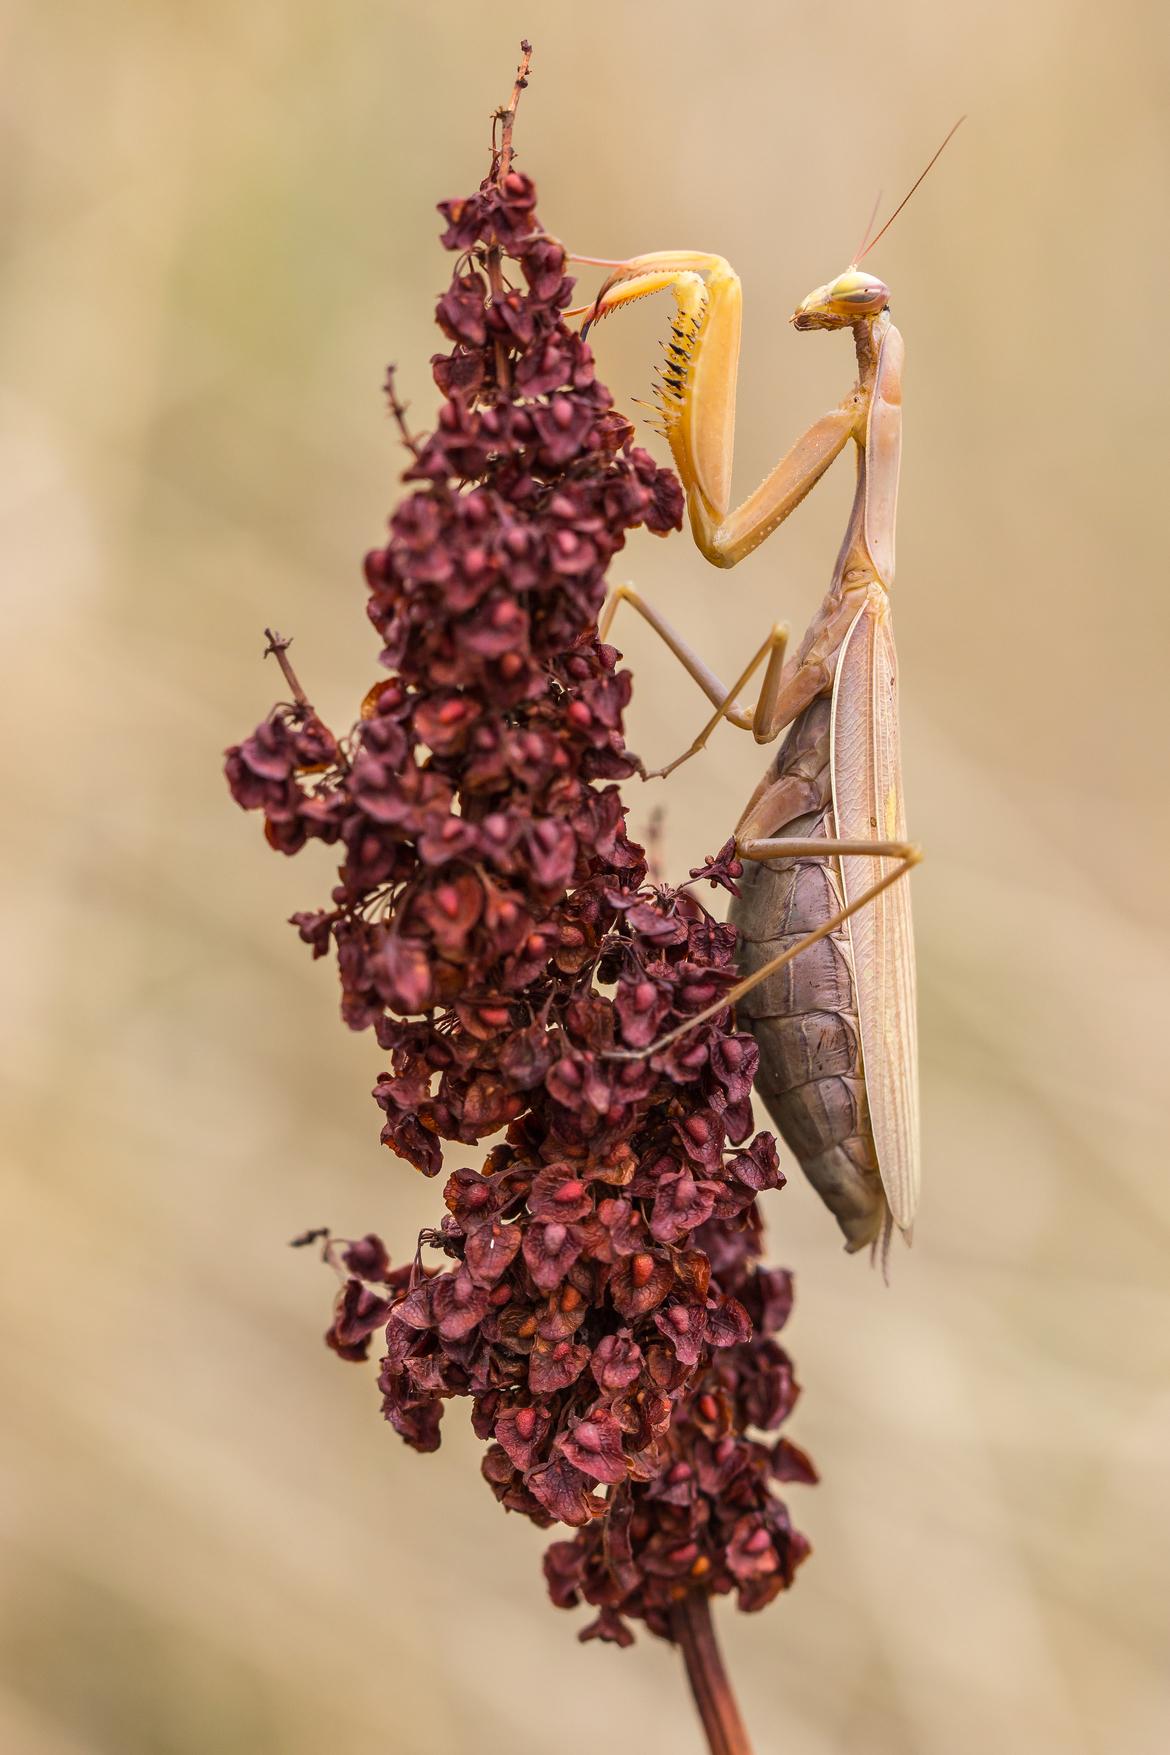 Mantis religiosa (Weibchen) - Canon EOS 600D, 100 mm, f/5.6, ISO: 200 und 1/125 s. Foto: Michael Roy